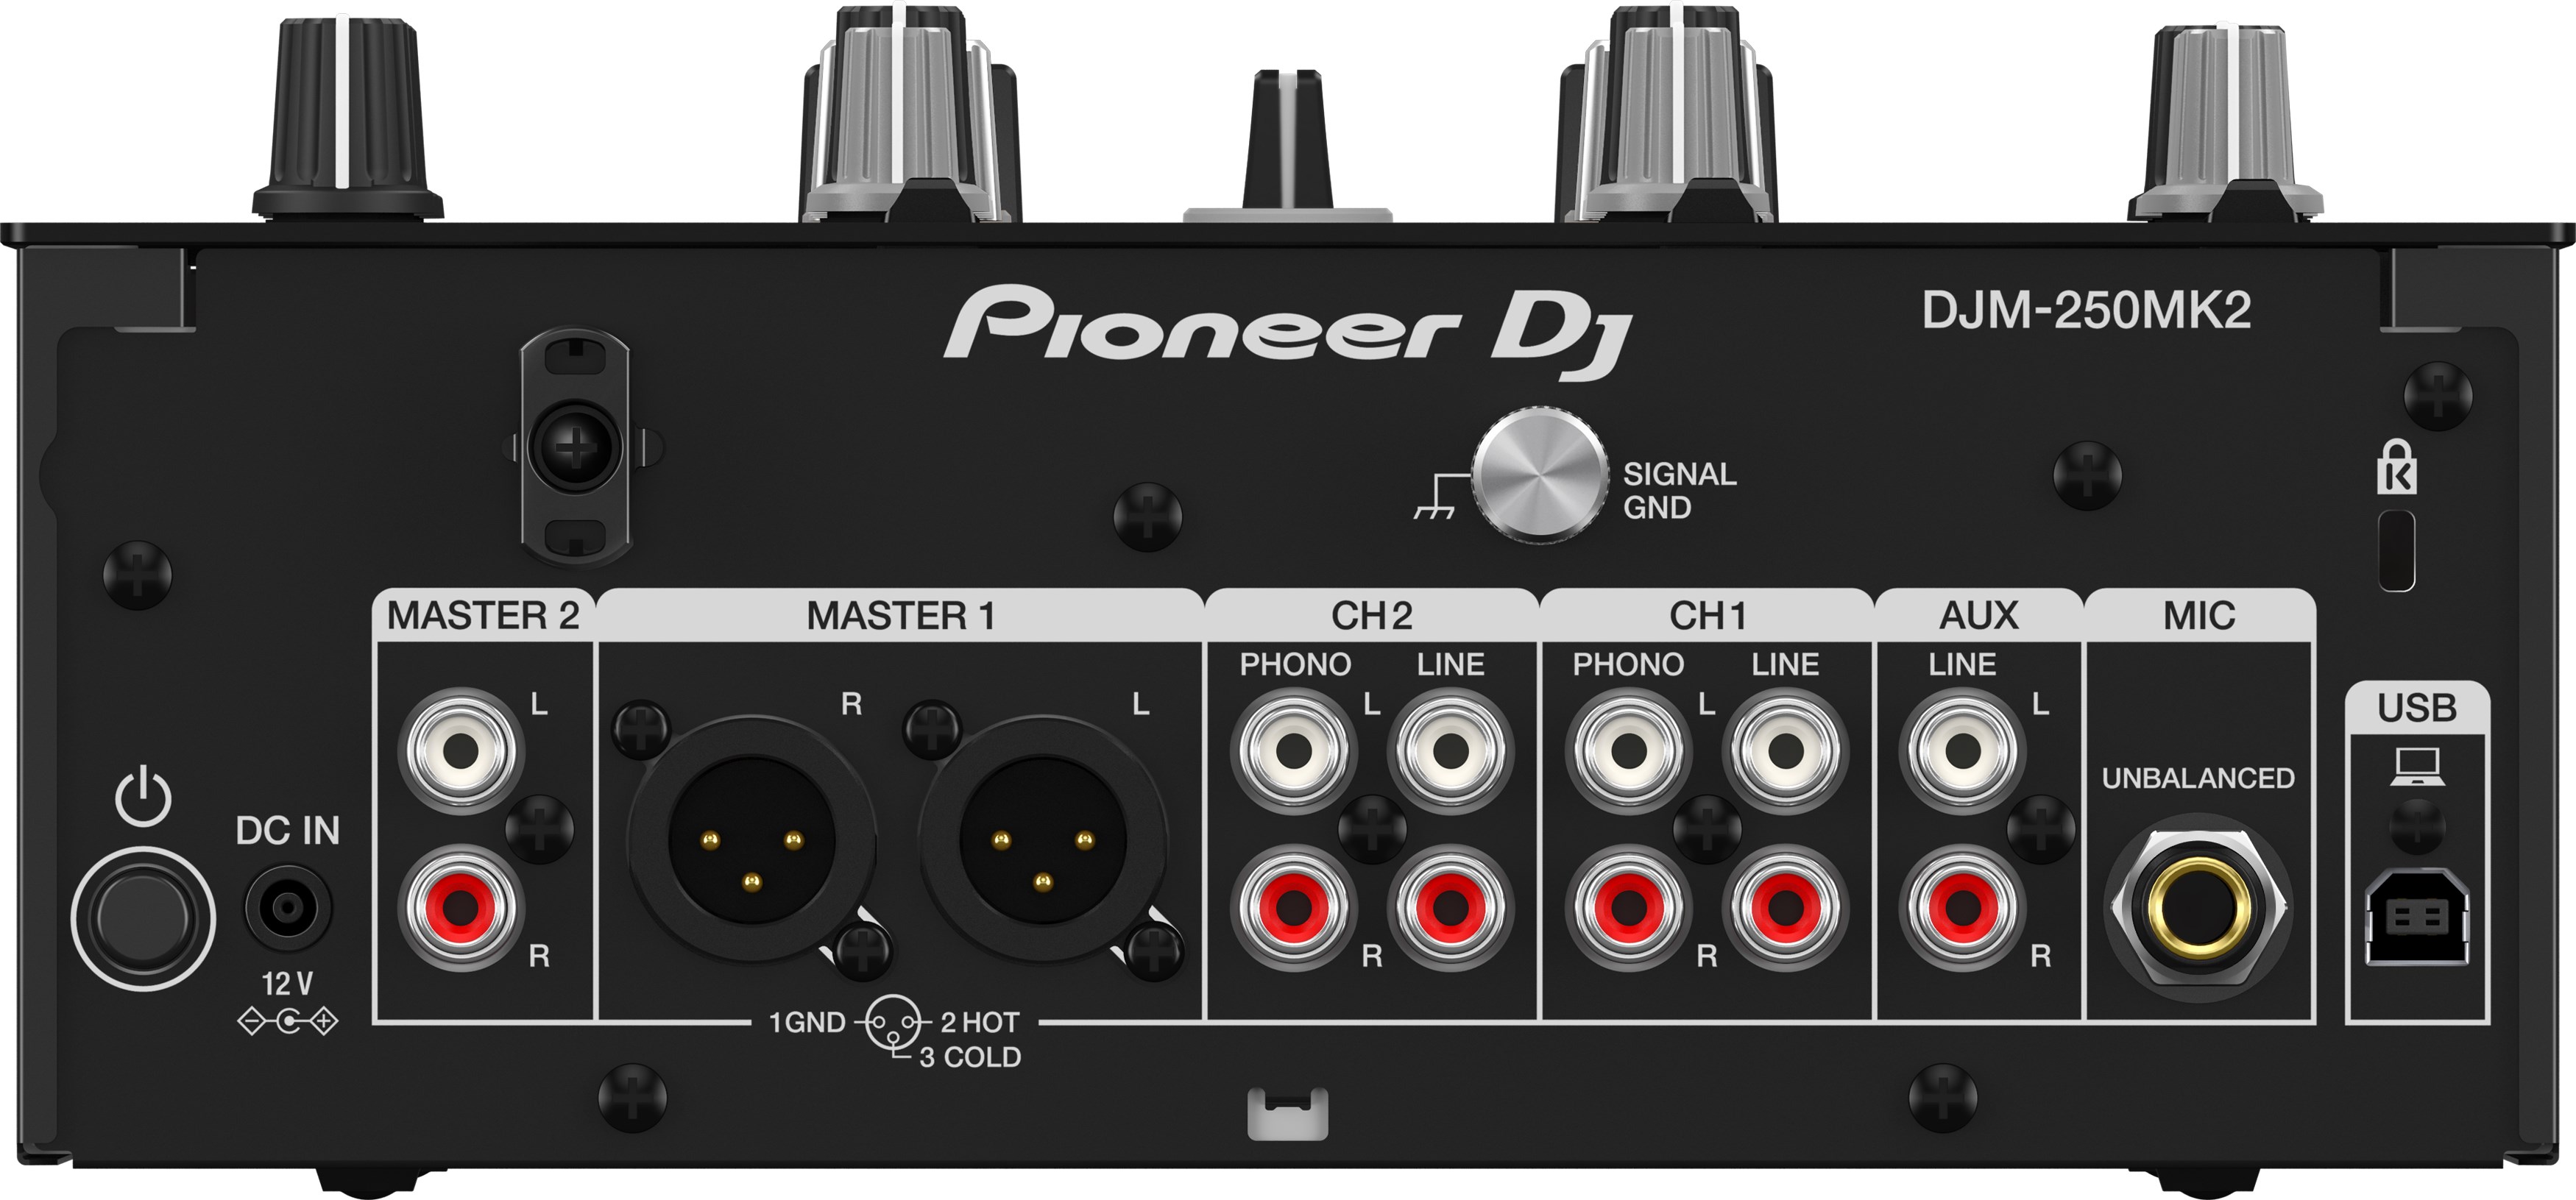 Pioneer DJM-250Mk2 Connections